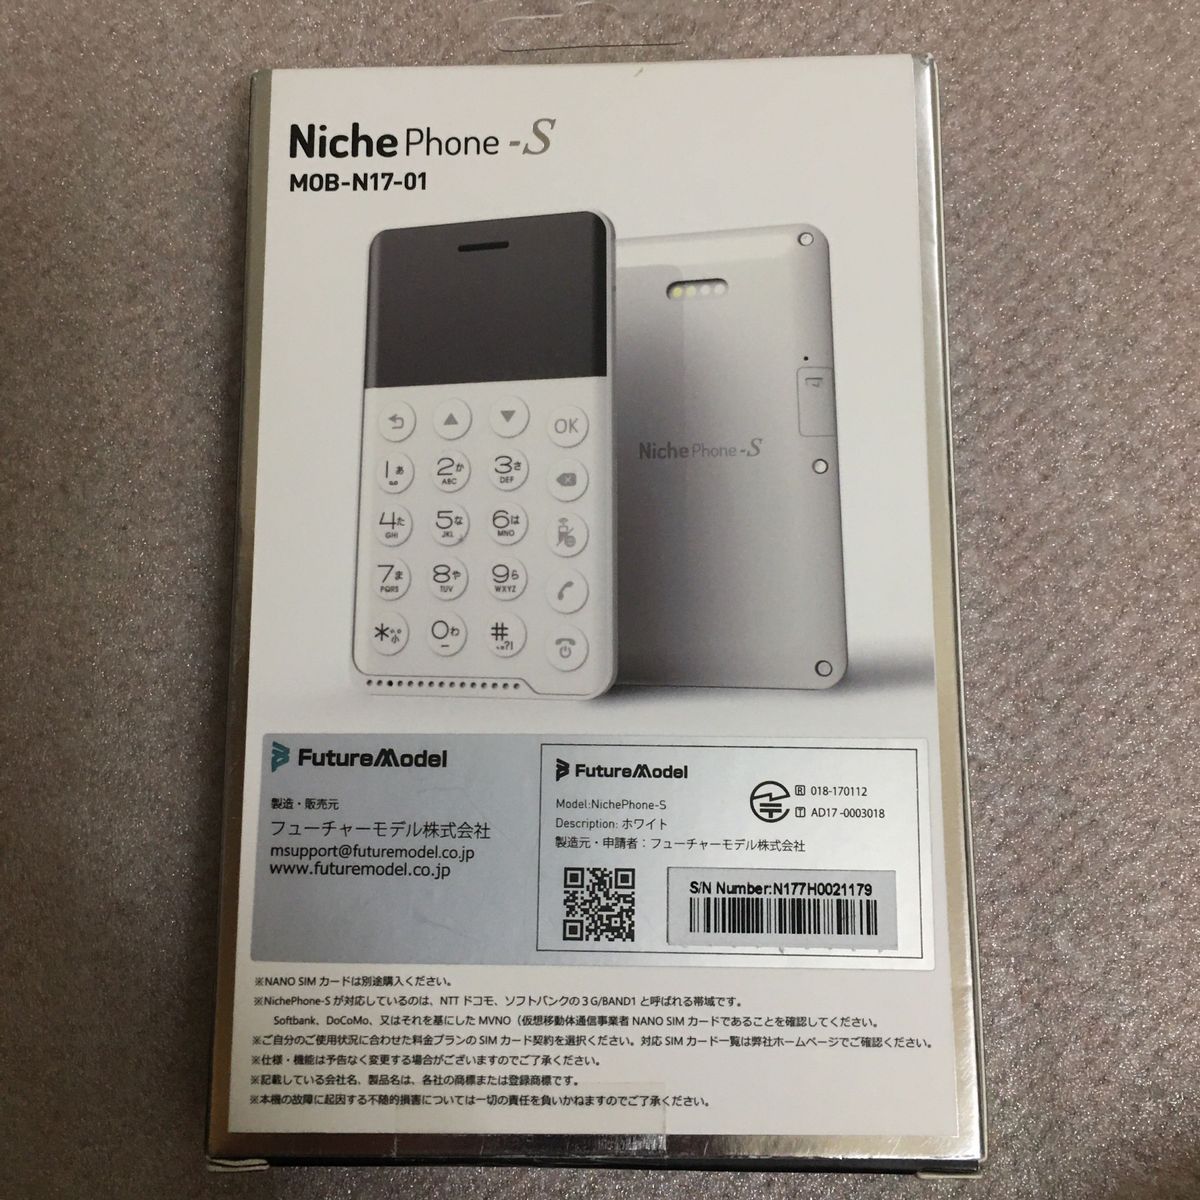 NichePhone-S(ニッチフォン-S)(ホワイト) MOB-N17-01